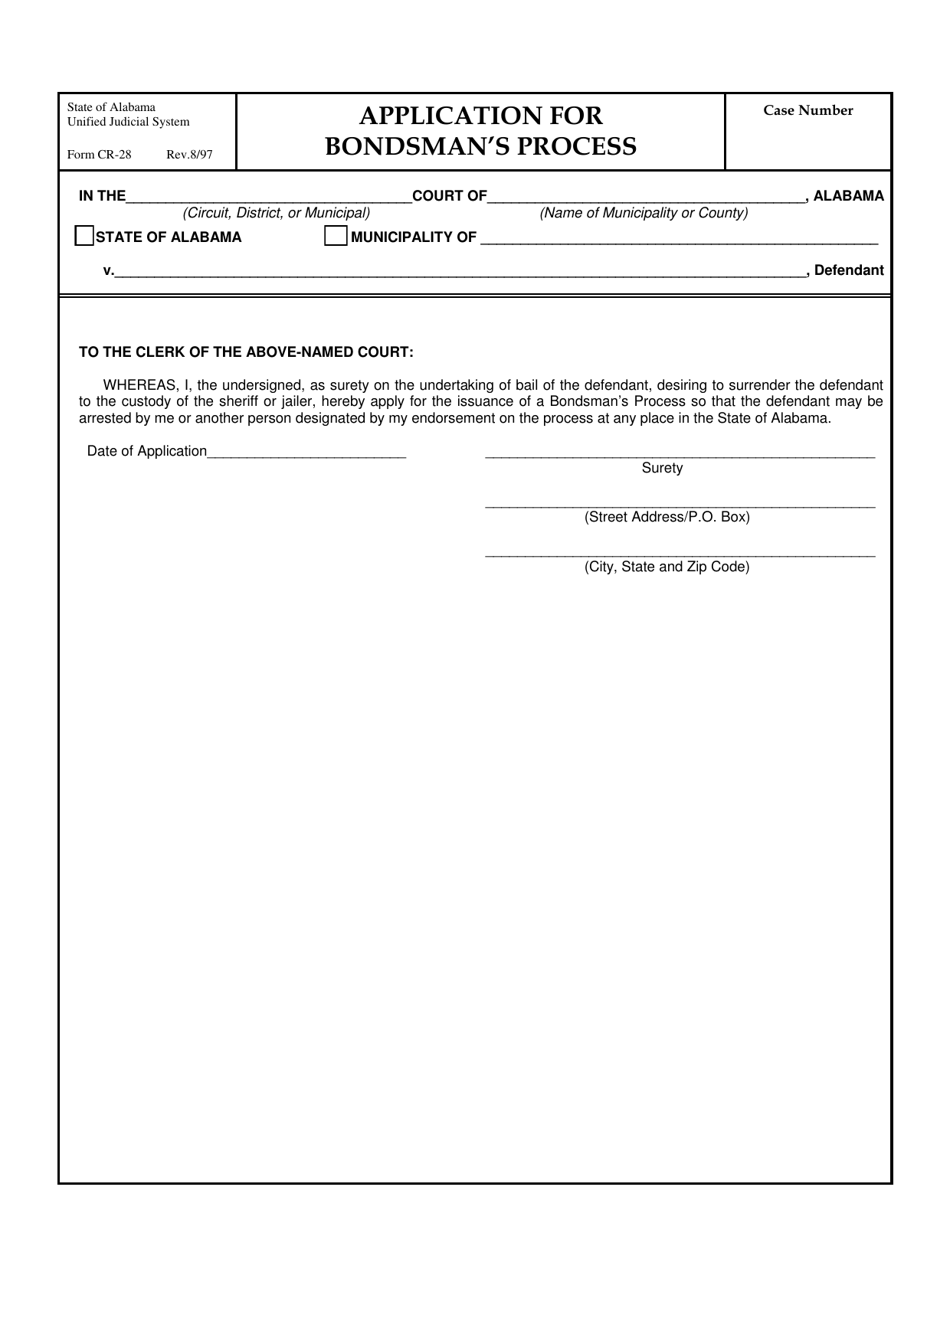 Form CR-28 Application for Bondsmans Process - Alabama, Page 1